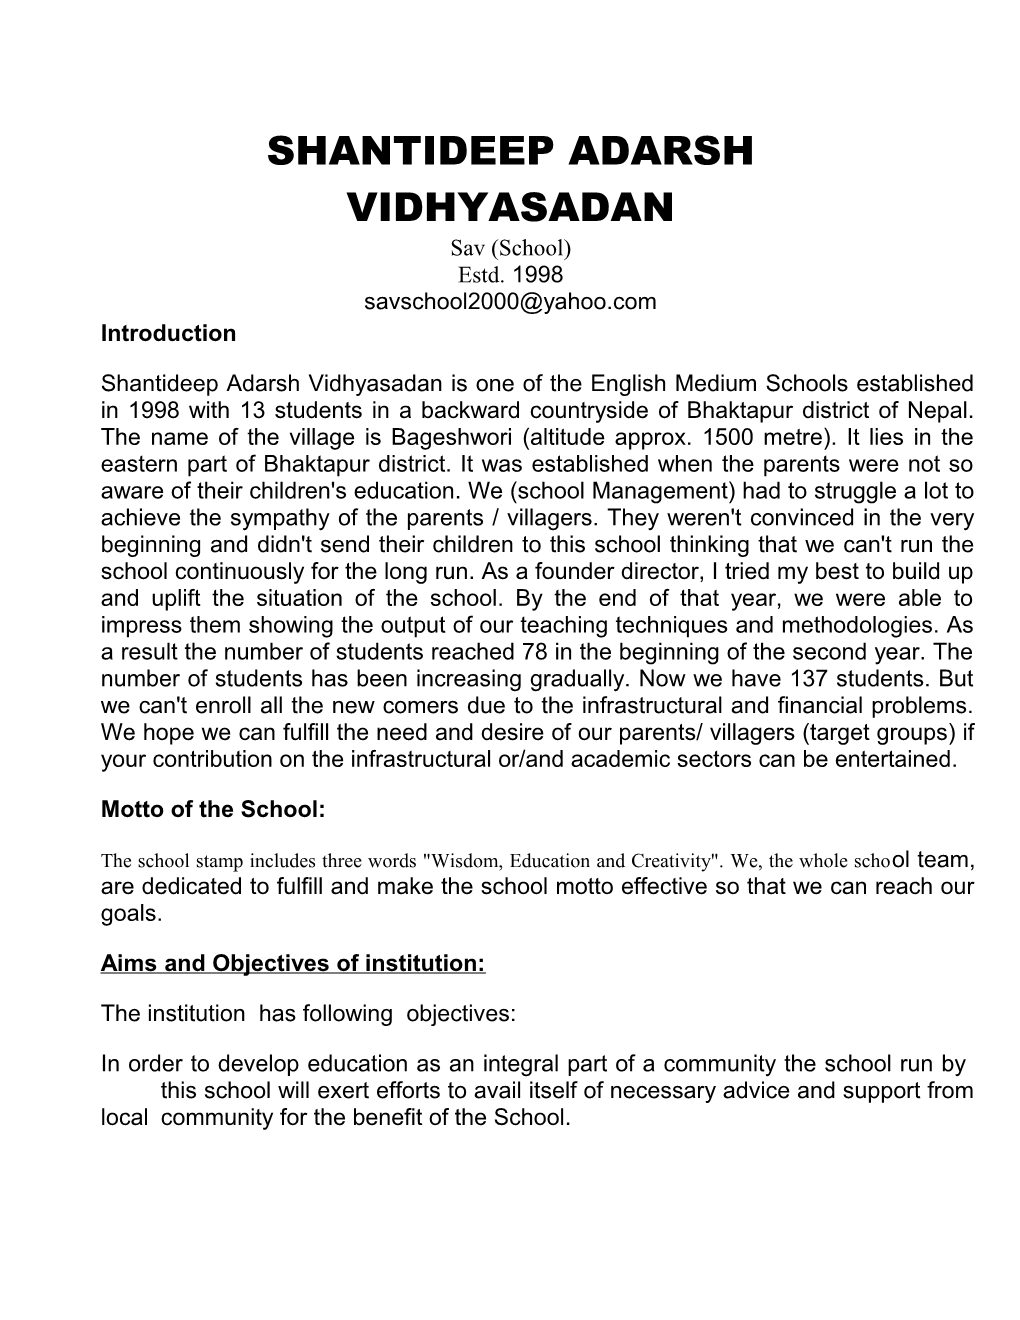 Shantideep Adarsh Vidhyasadan